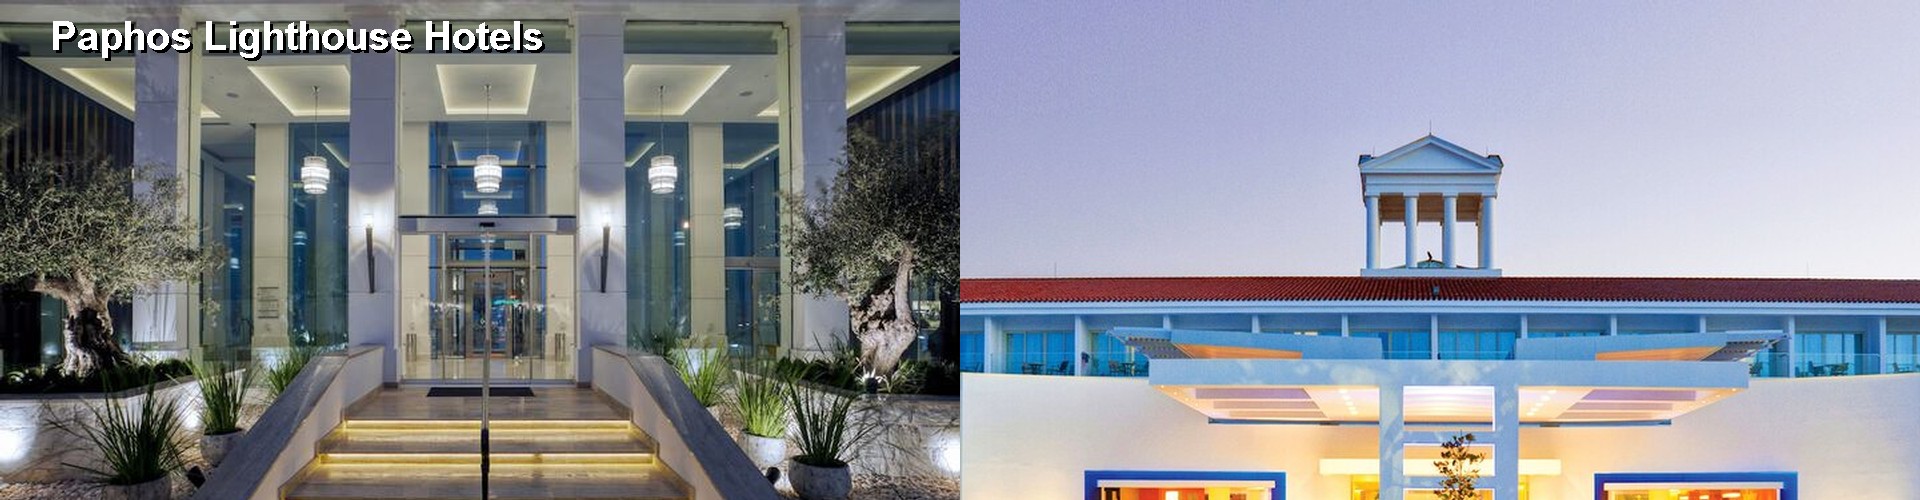 5 Best Hotels near Paphos Lighthouse